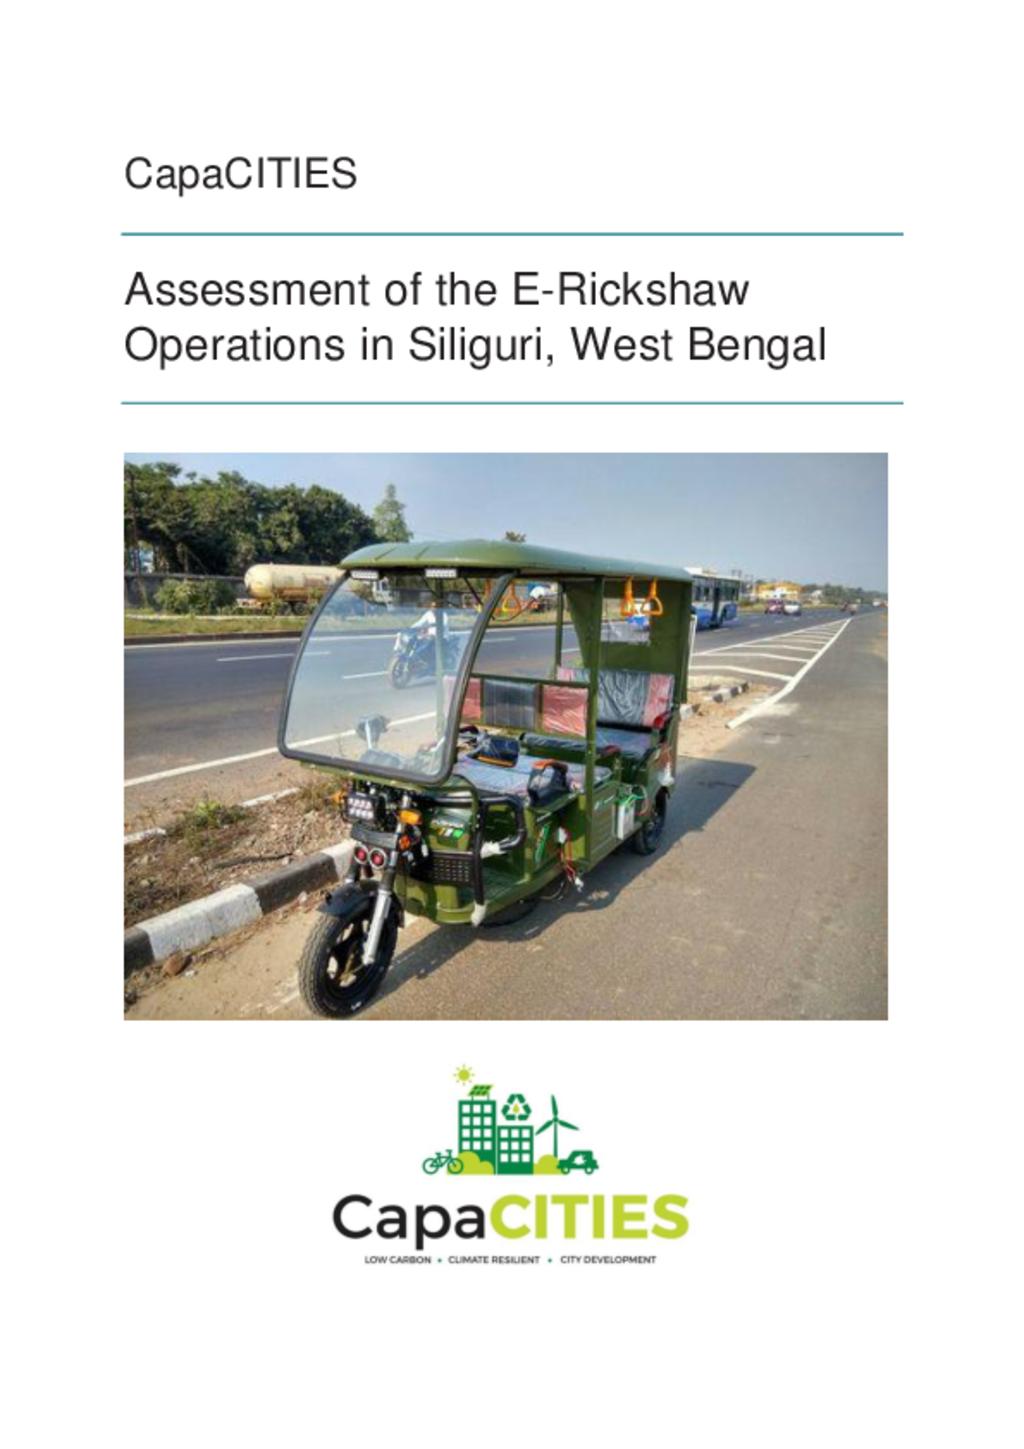 E- rickshaw